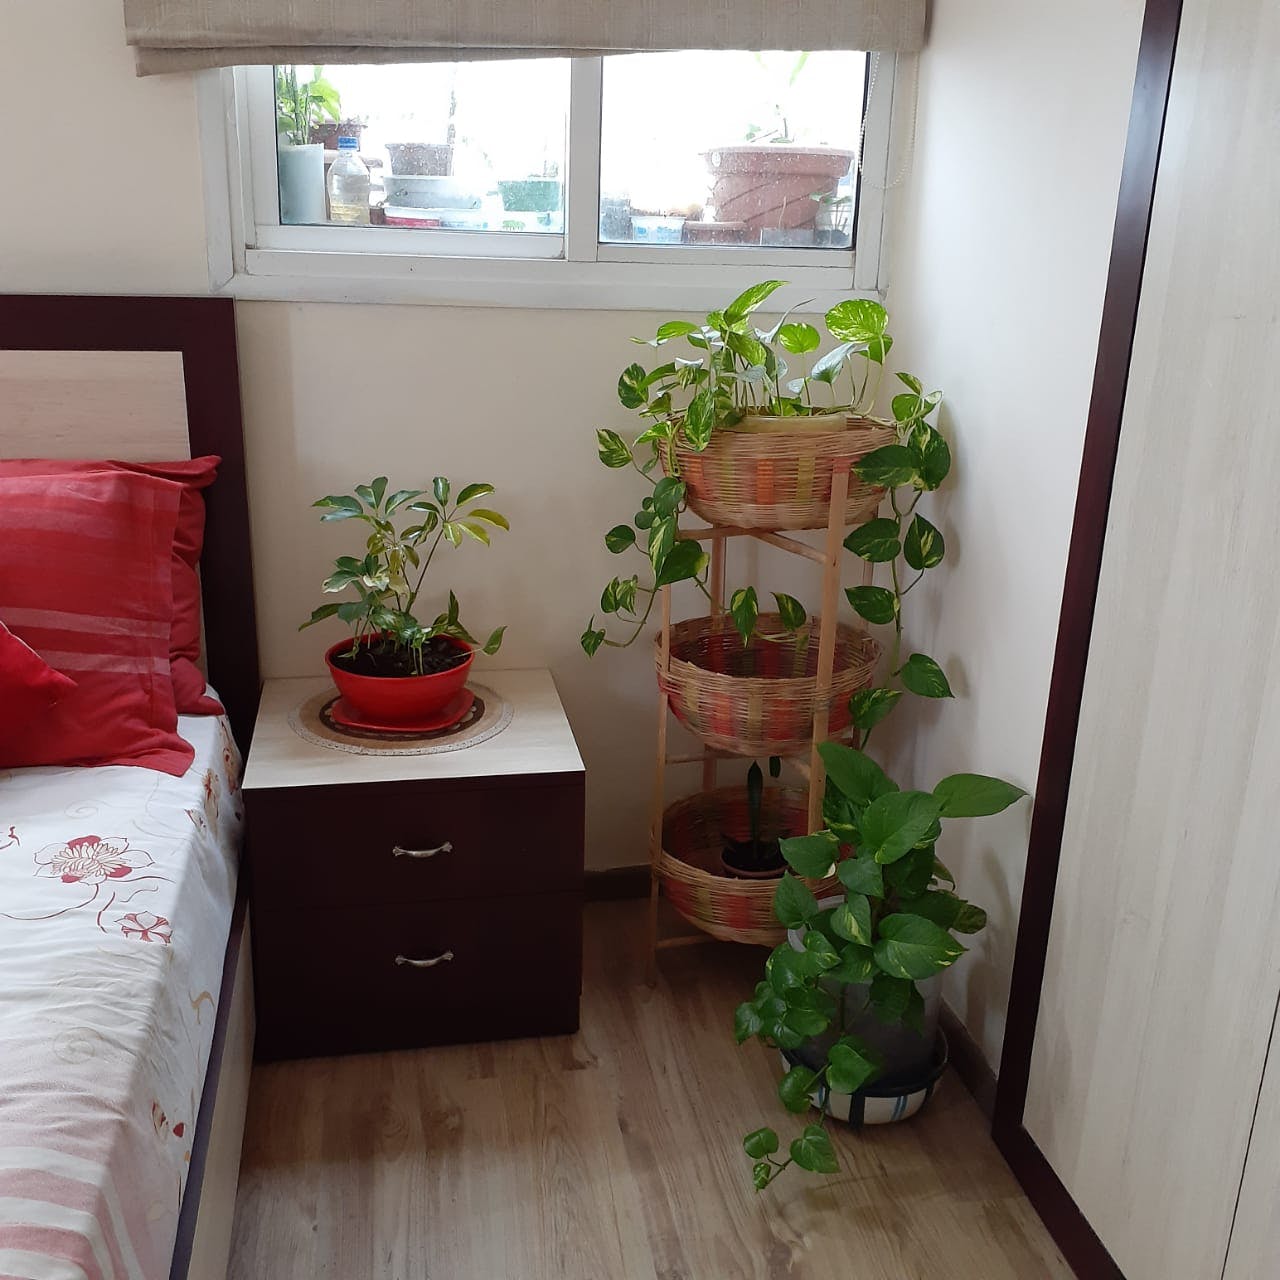 Houseplant,Room,Property,Plant,Flower,Interior design,Floor,House,Building,Herb